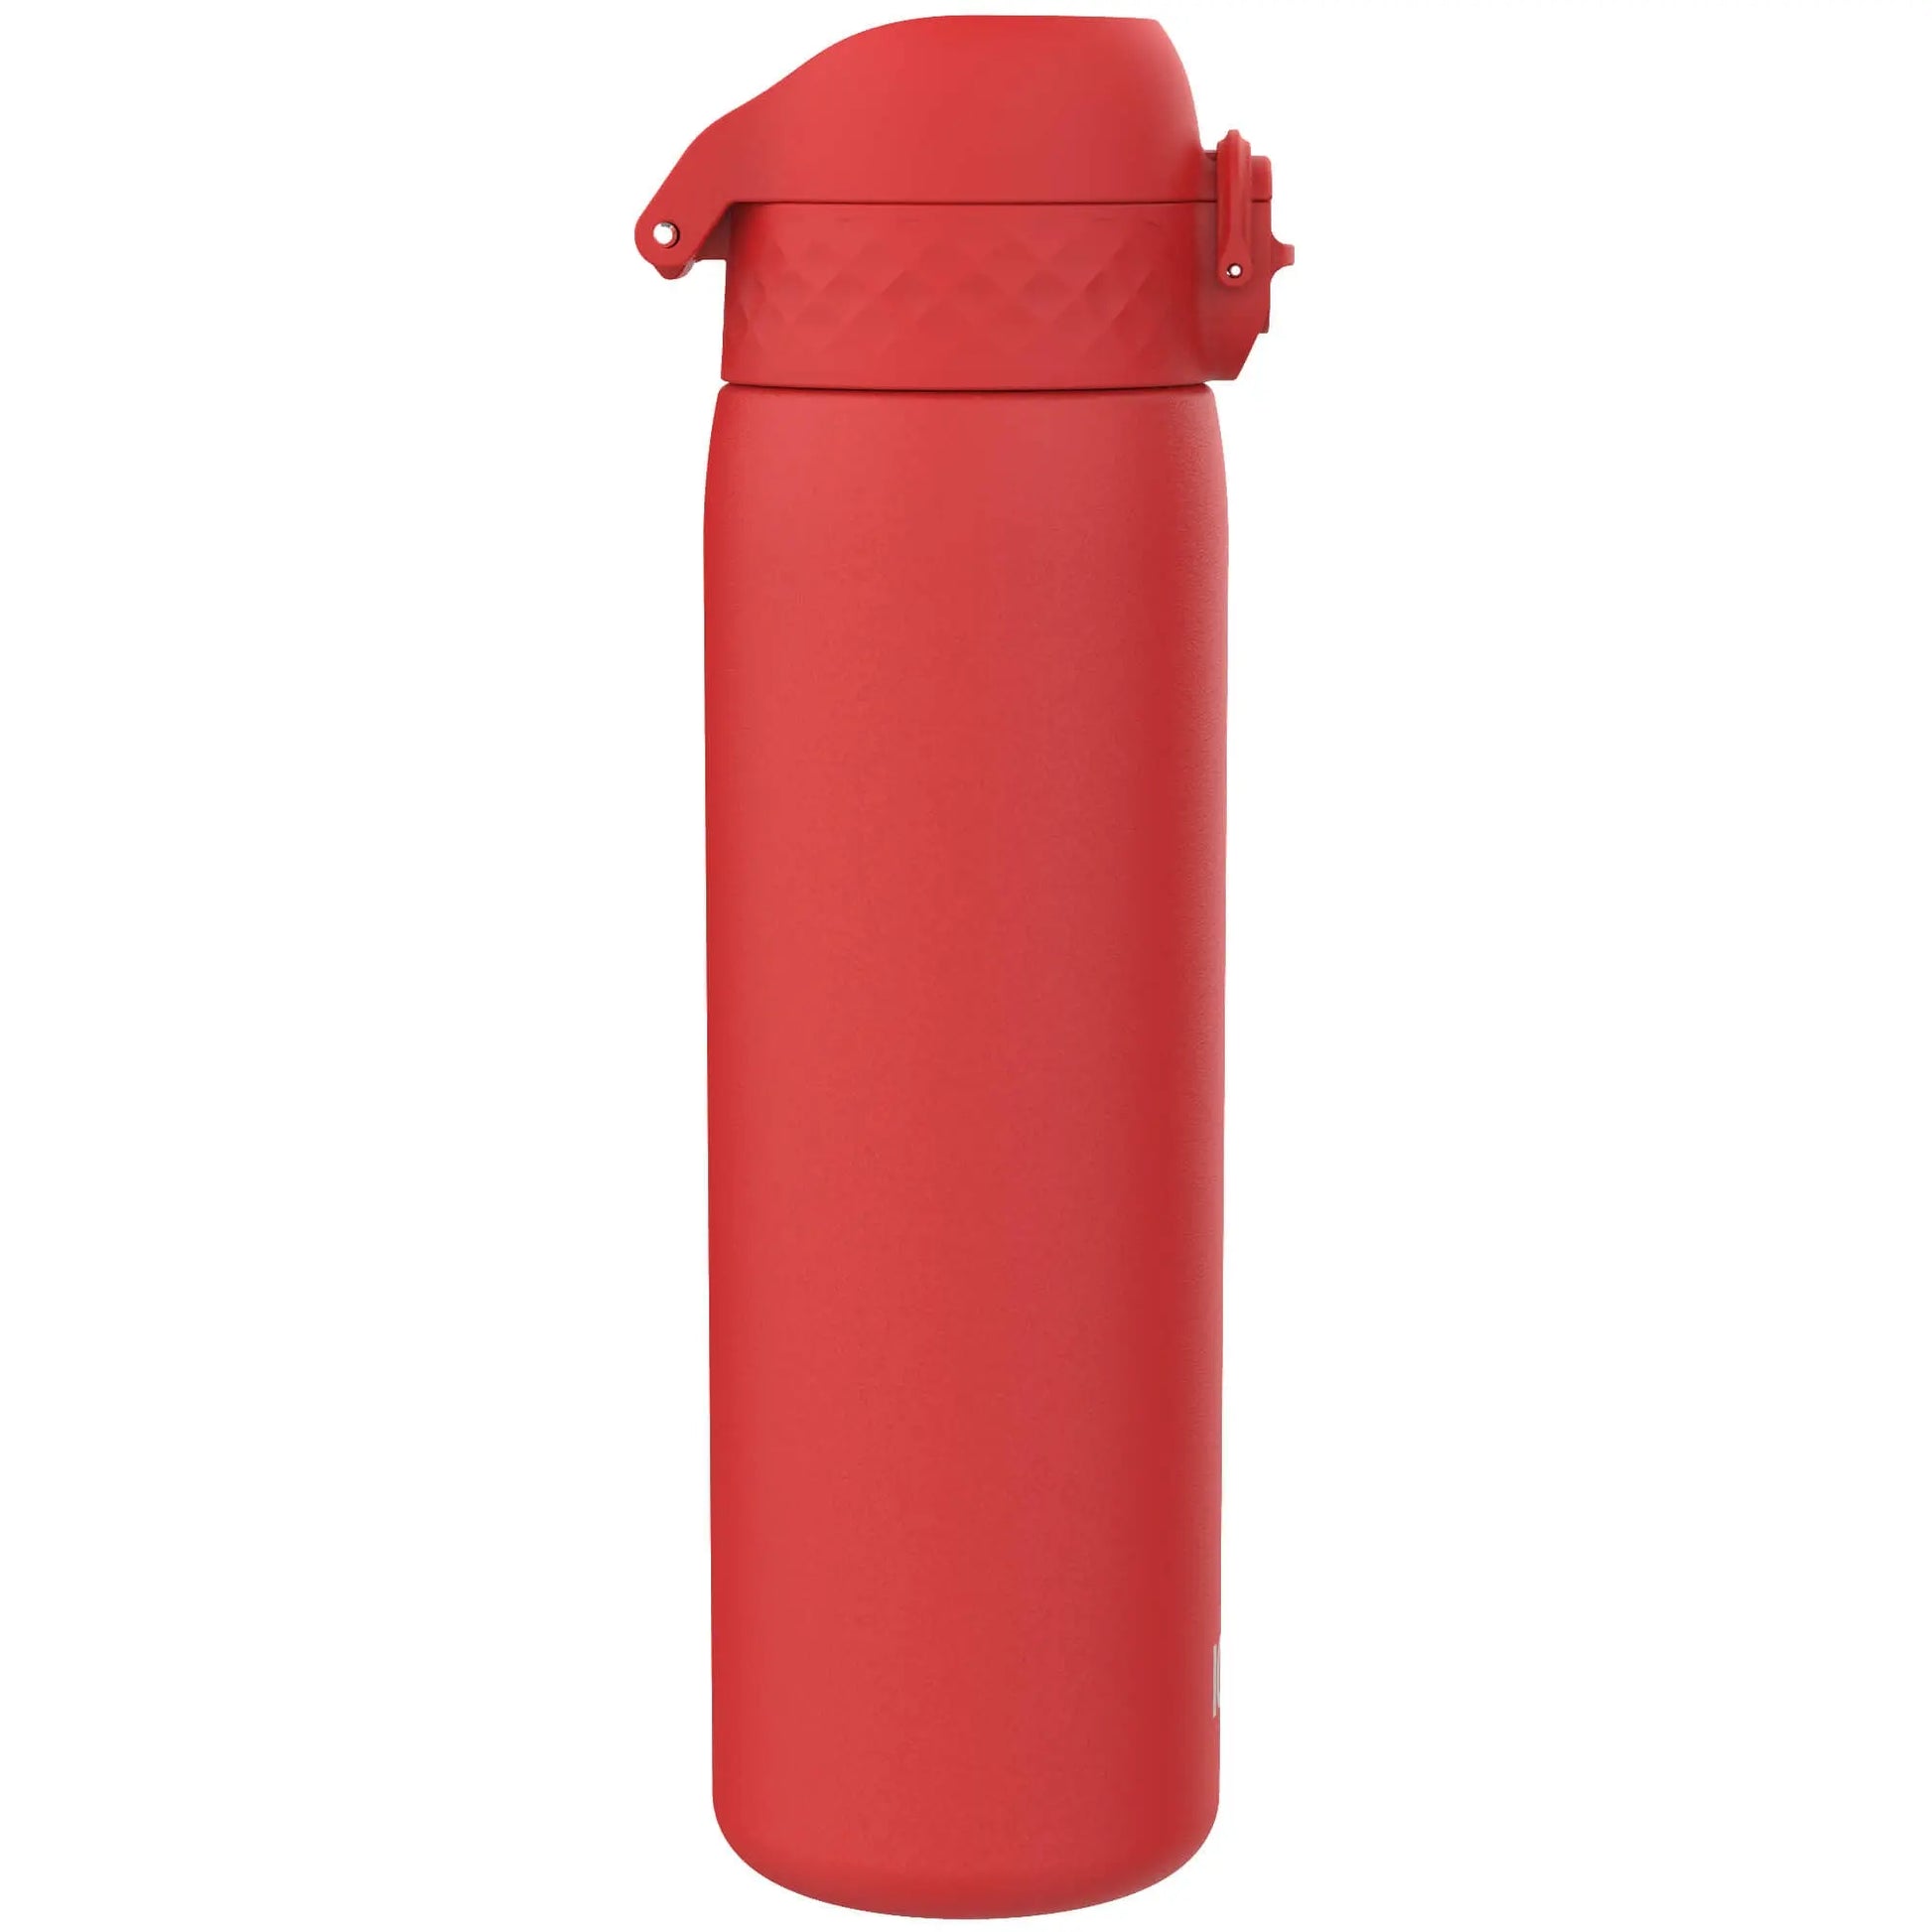 Leak Proof Slim Water Bottle, Stainless Steel, Red, 600ml (20oz) - ION8